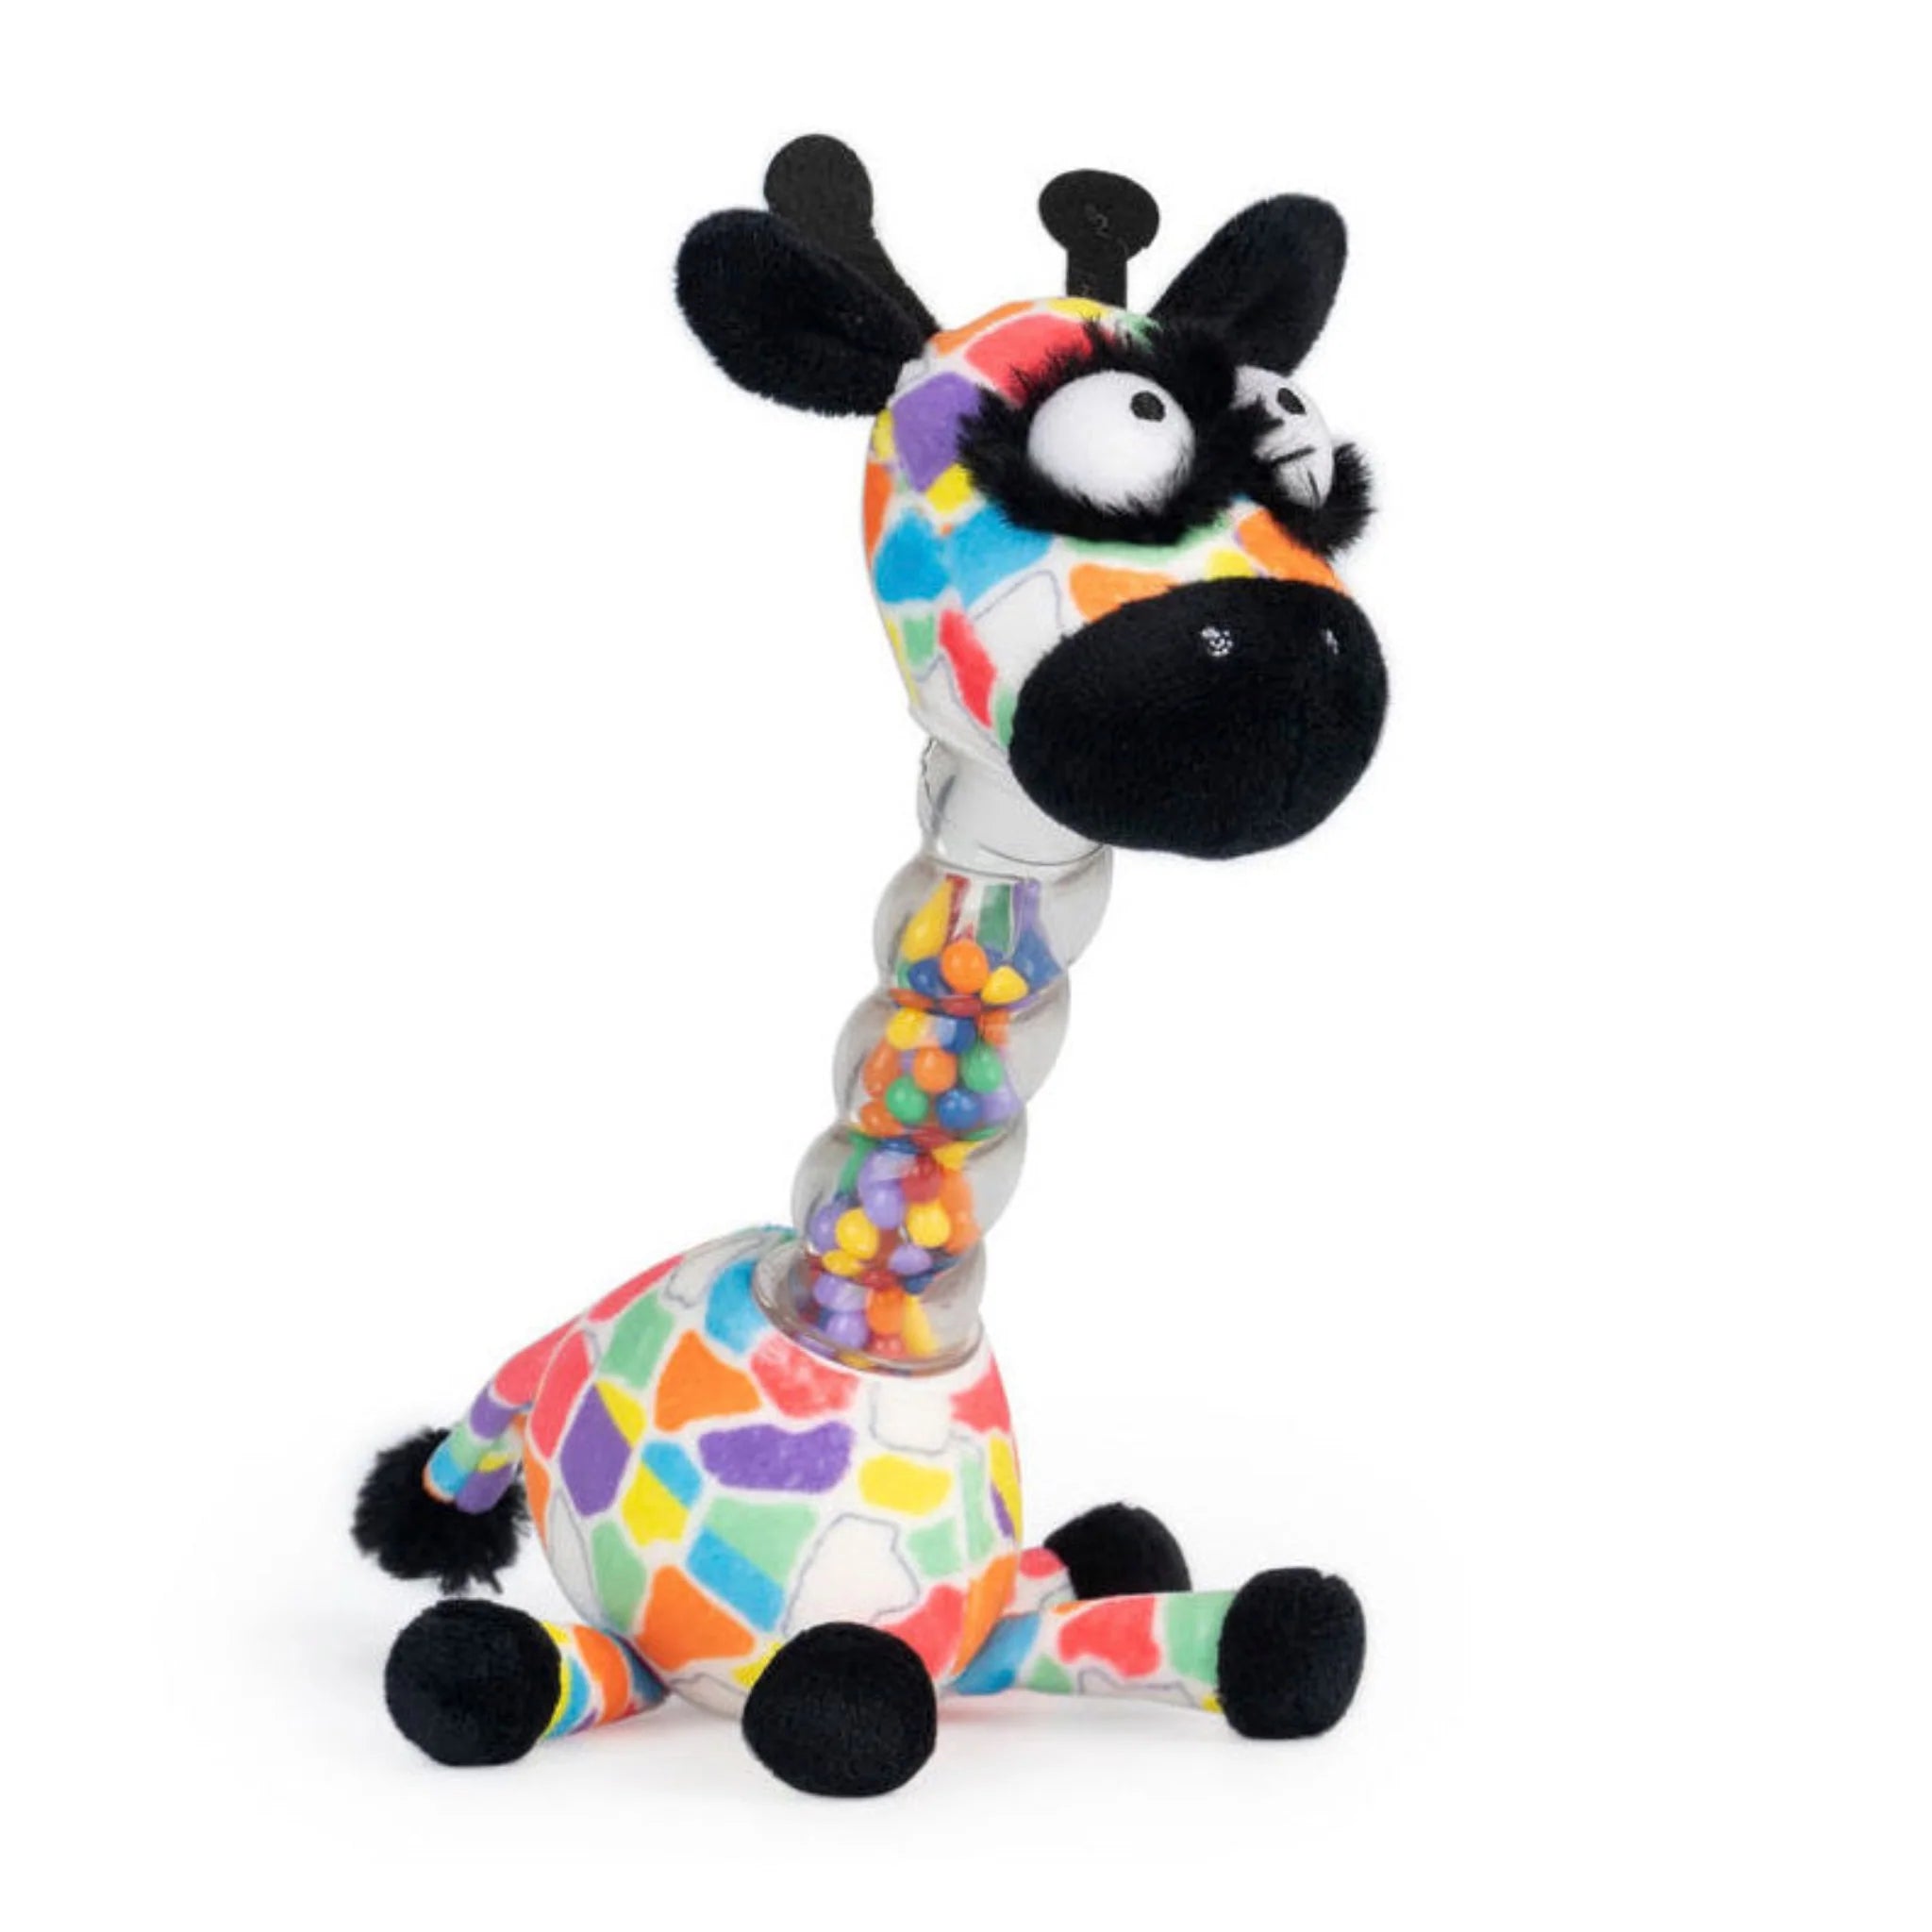 Jaffy the Fringe Footed Giraffe Hand Rattle Jingle Jangle Activity Toy - Twinkle Twinkle Little One